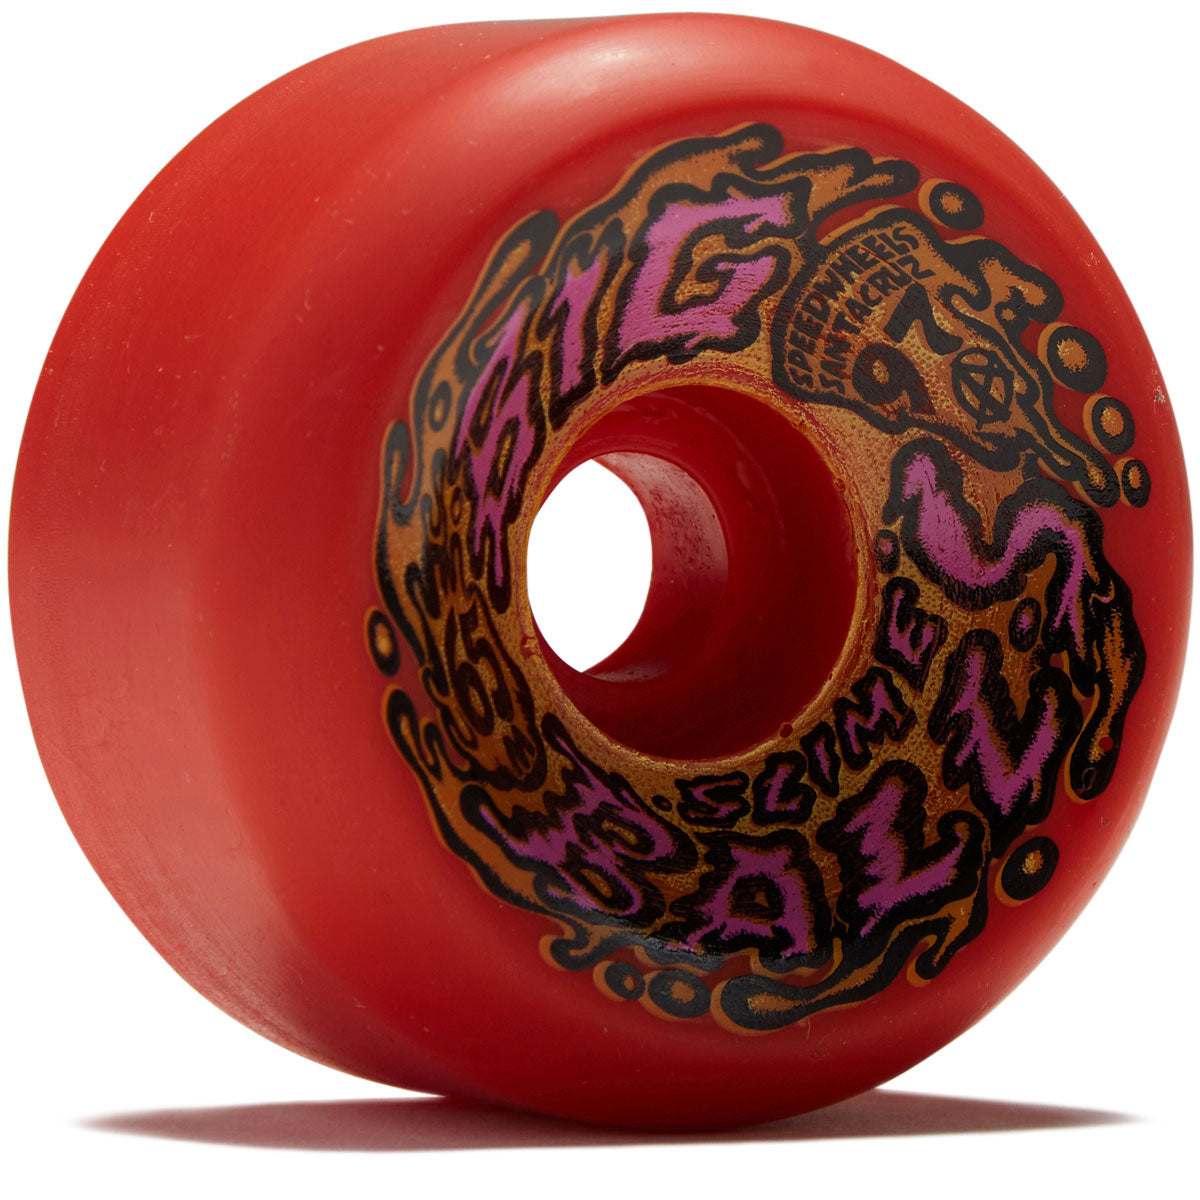 Slime Balls Big Balls Reissue 97a Skateboard Wheels - Red - 65mm image 1